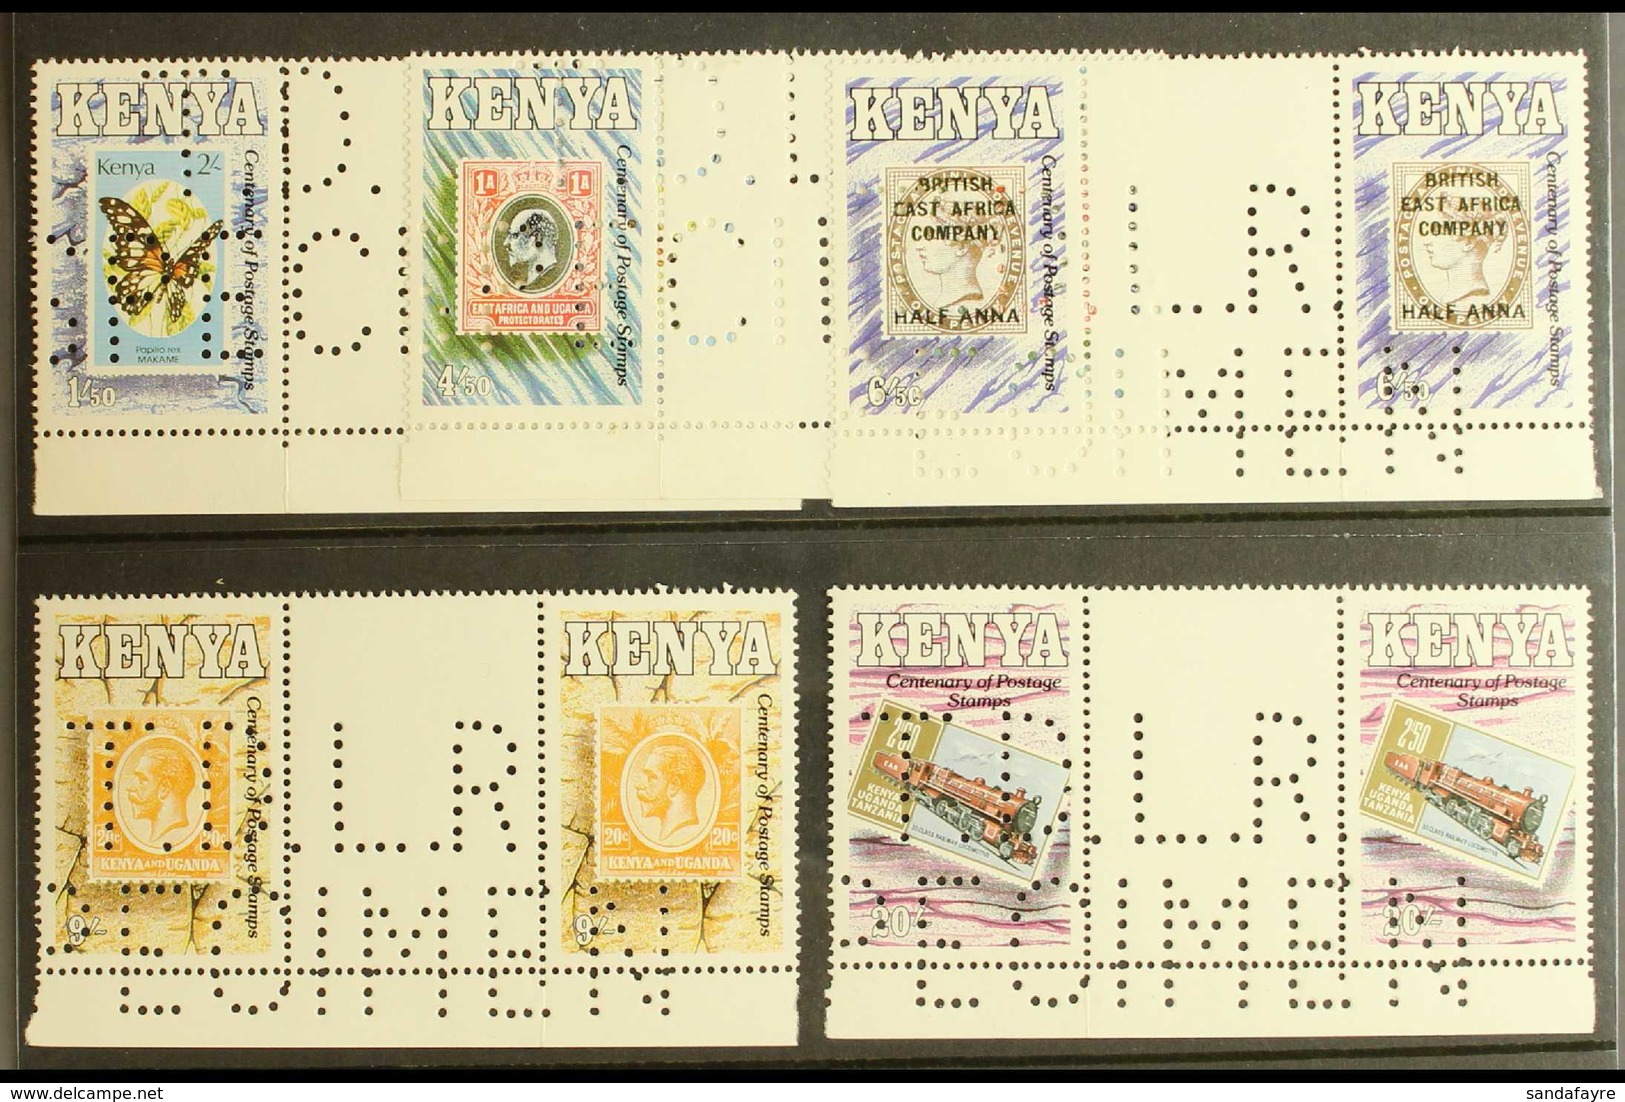 1990 POSTAL CENTENARY - DLR SPECIMENS Centenary Of Postage Stamps In Kenya Set (SG 547/51) In Never Hinged Mint Gutter P - Kenia (1963-...)